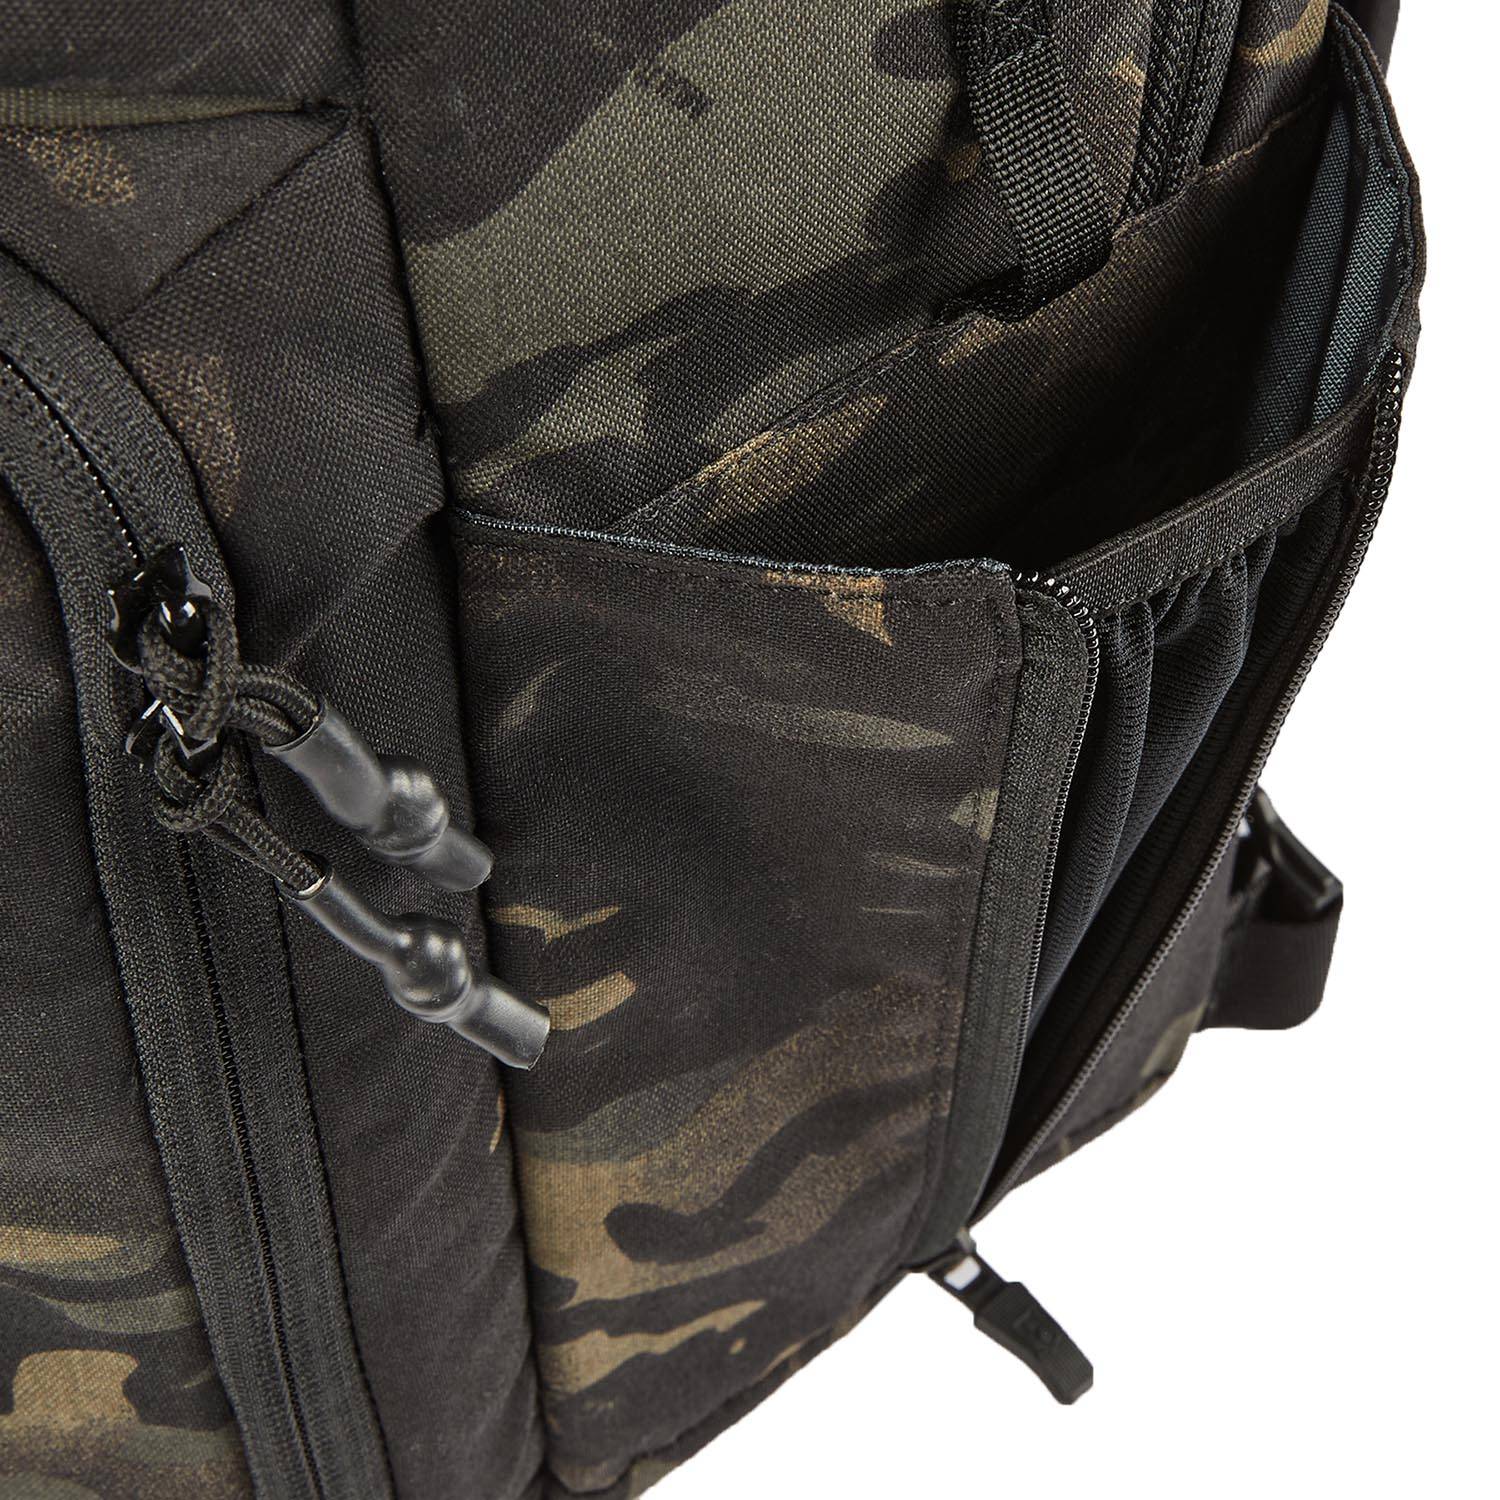 VIKTOS Perimeter 25L Backpack | EDC Daypacks